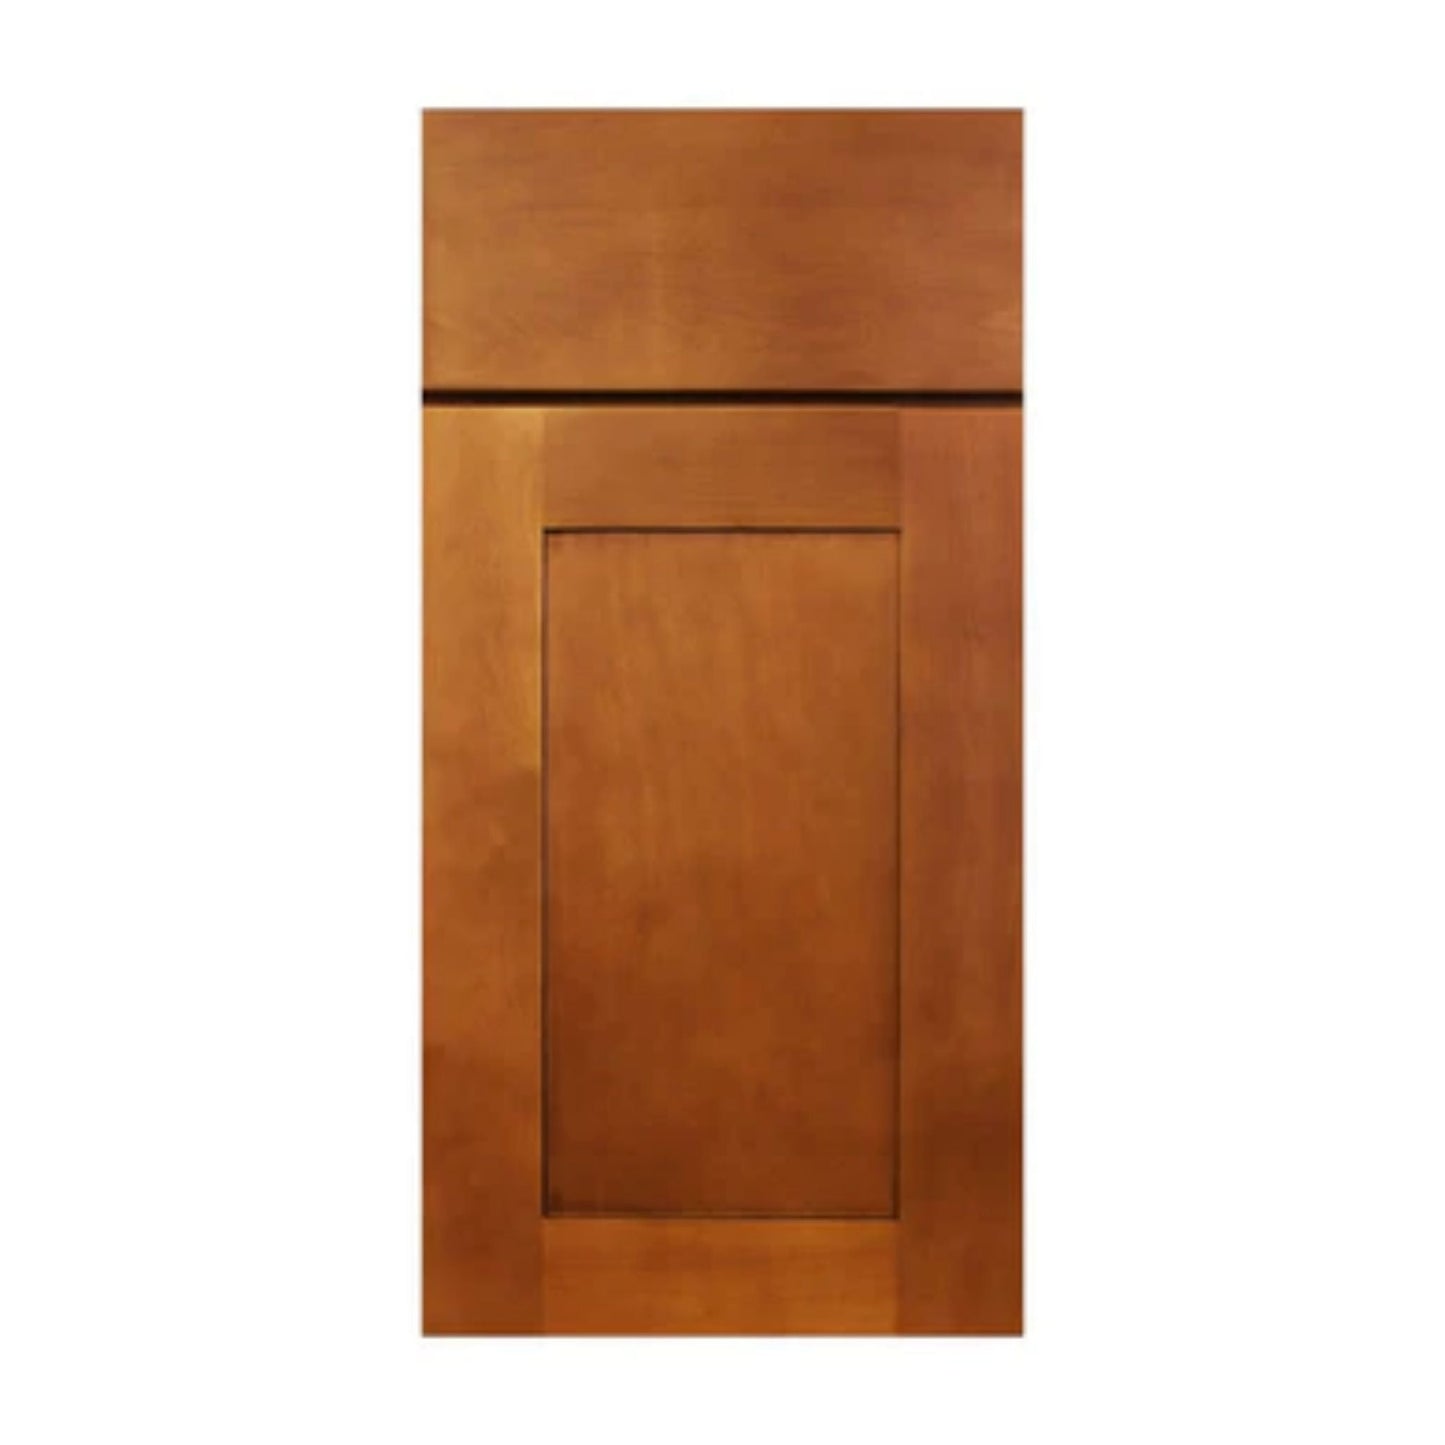 LessCare 18" x 42" x 12" Newport Wall Kitchen Cabinet - W1842